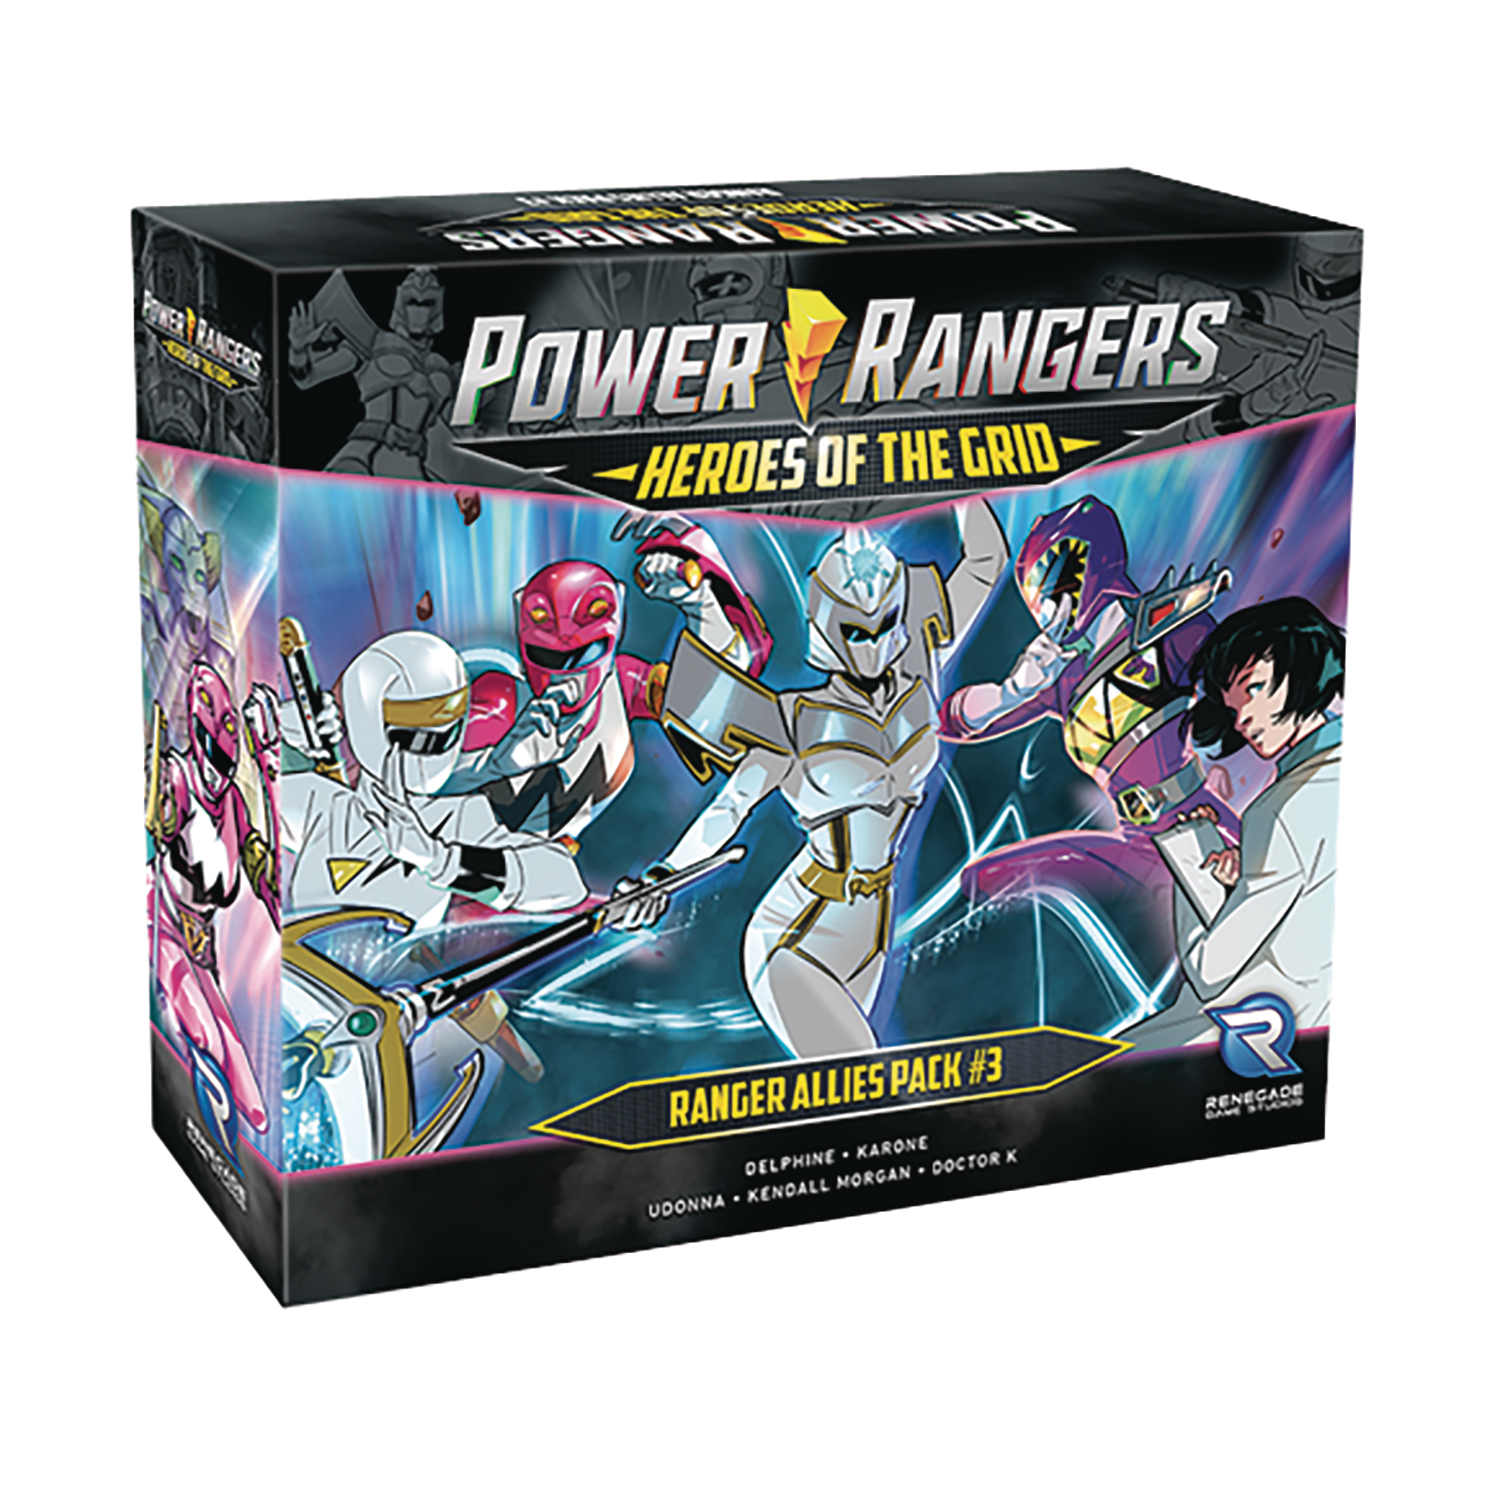 Power Rangers Heroes Grid Ranger Allies Pack 3 Expansion